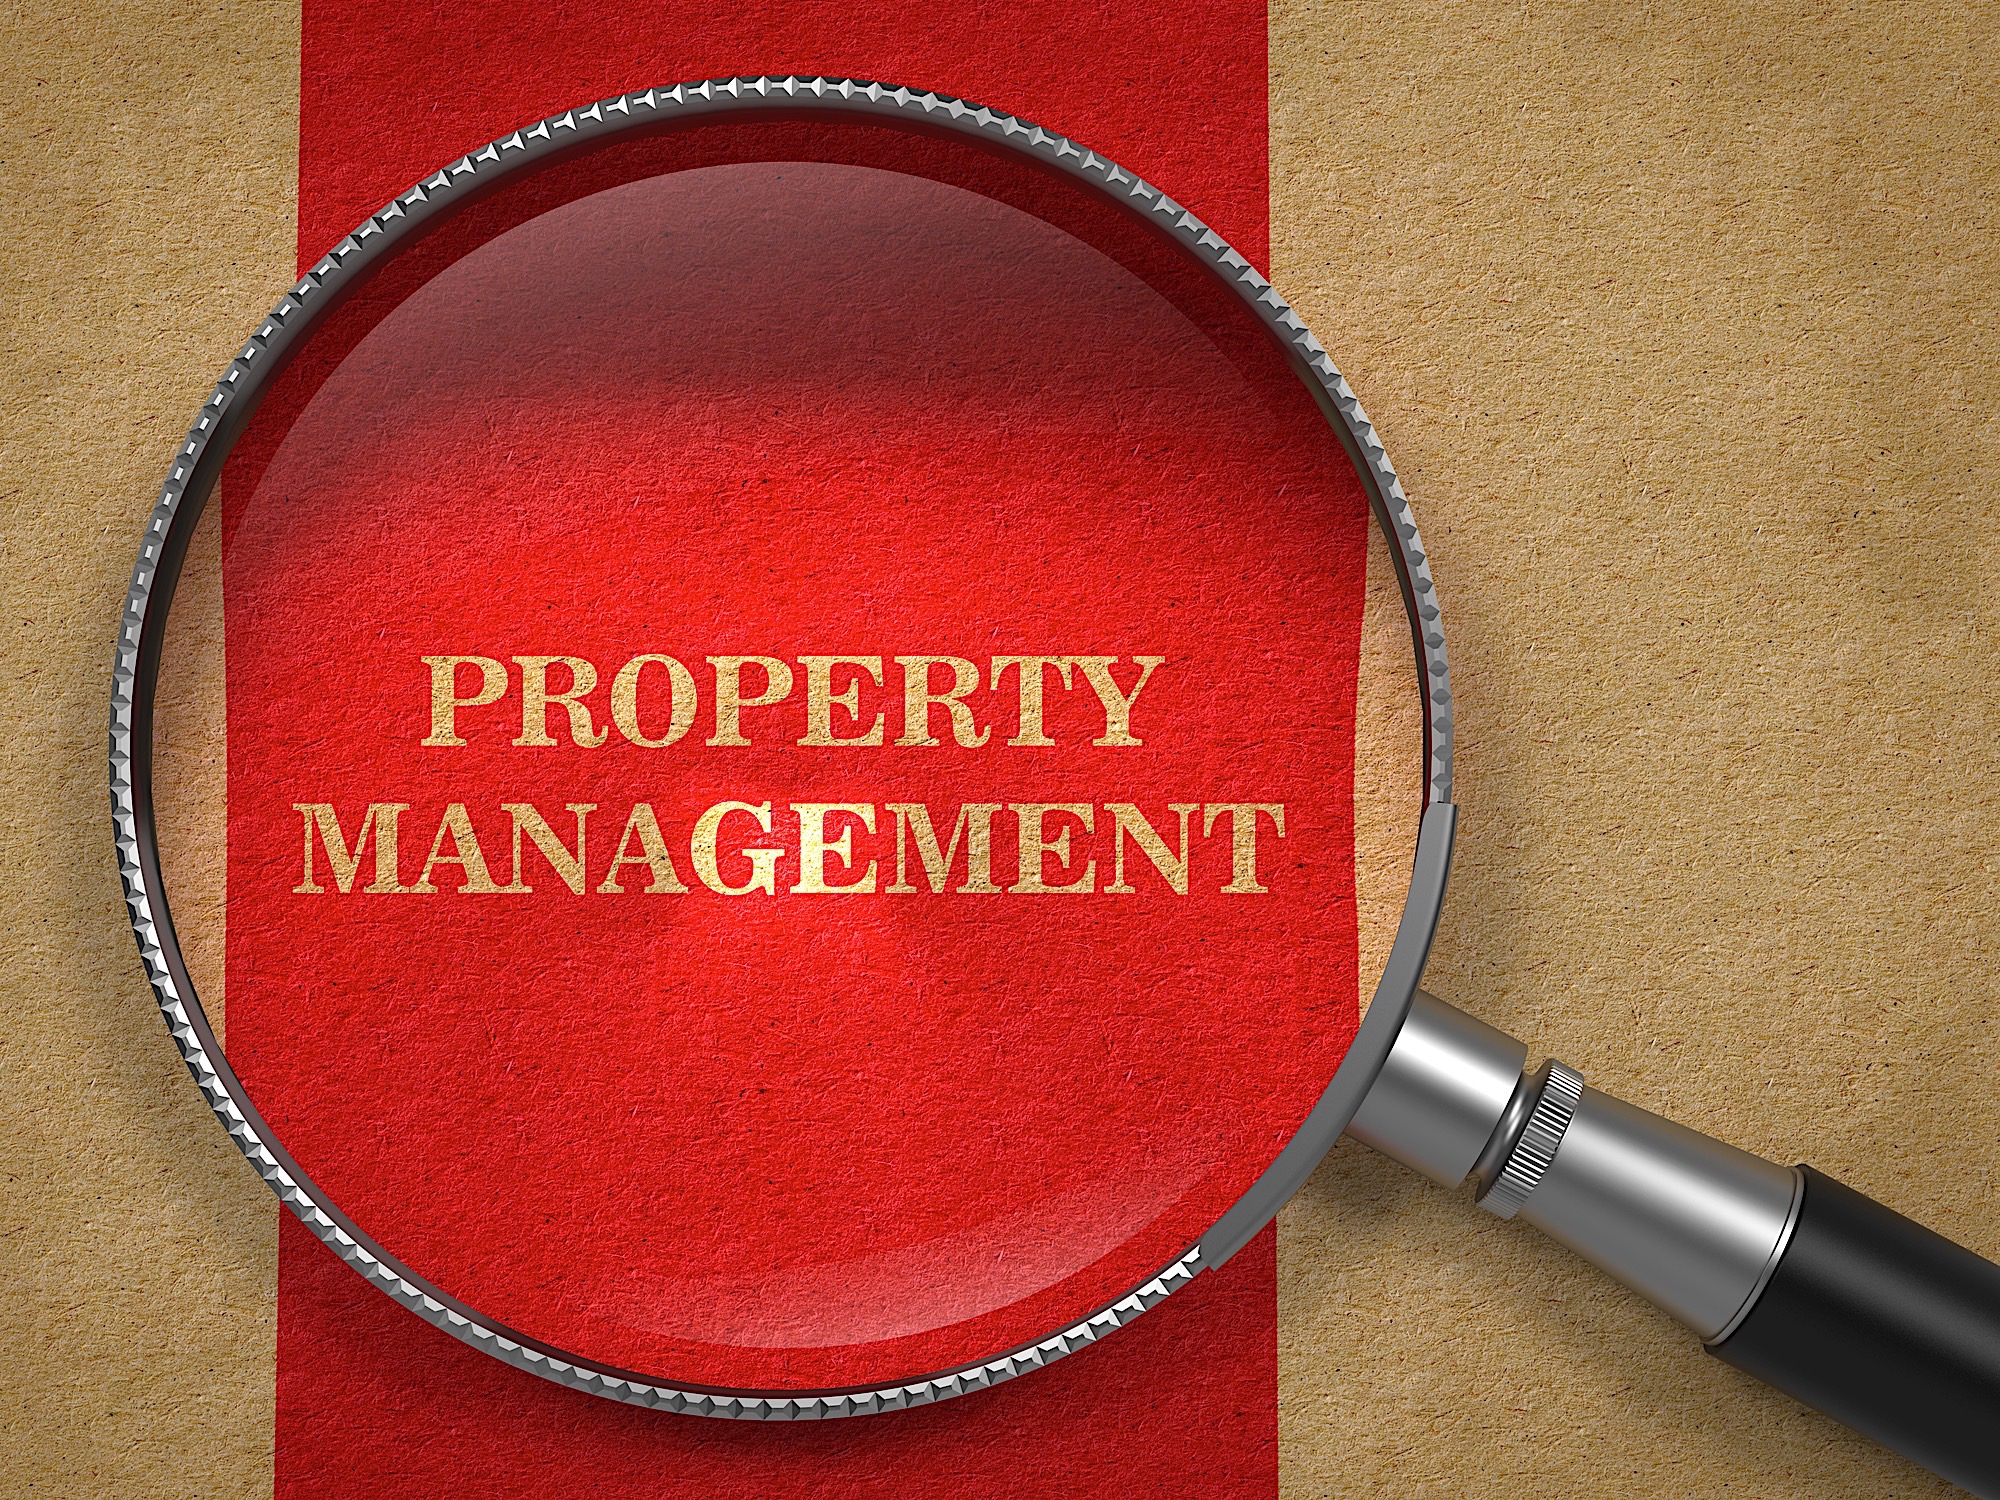 Henderson Nv Property Management